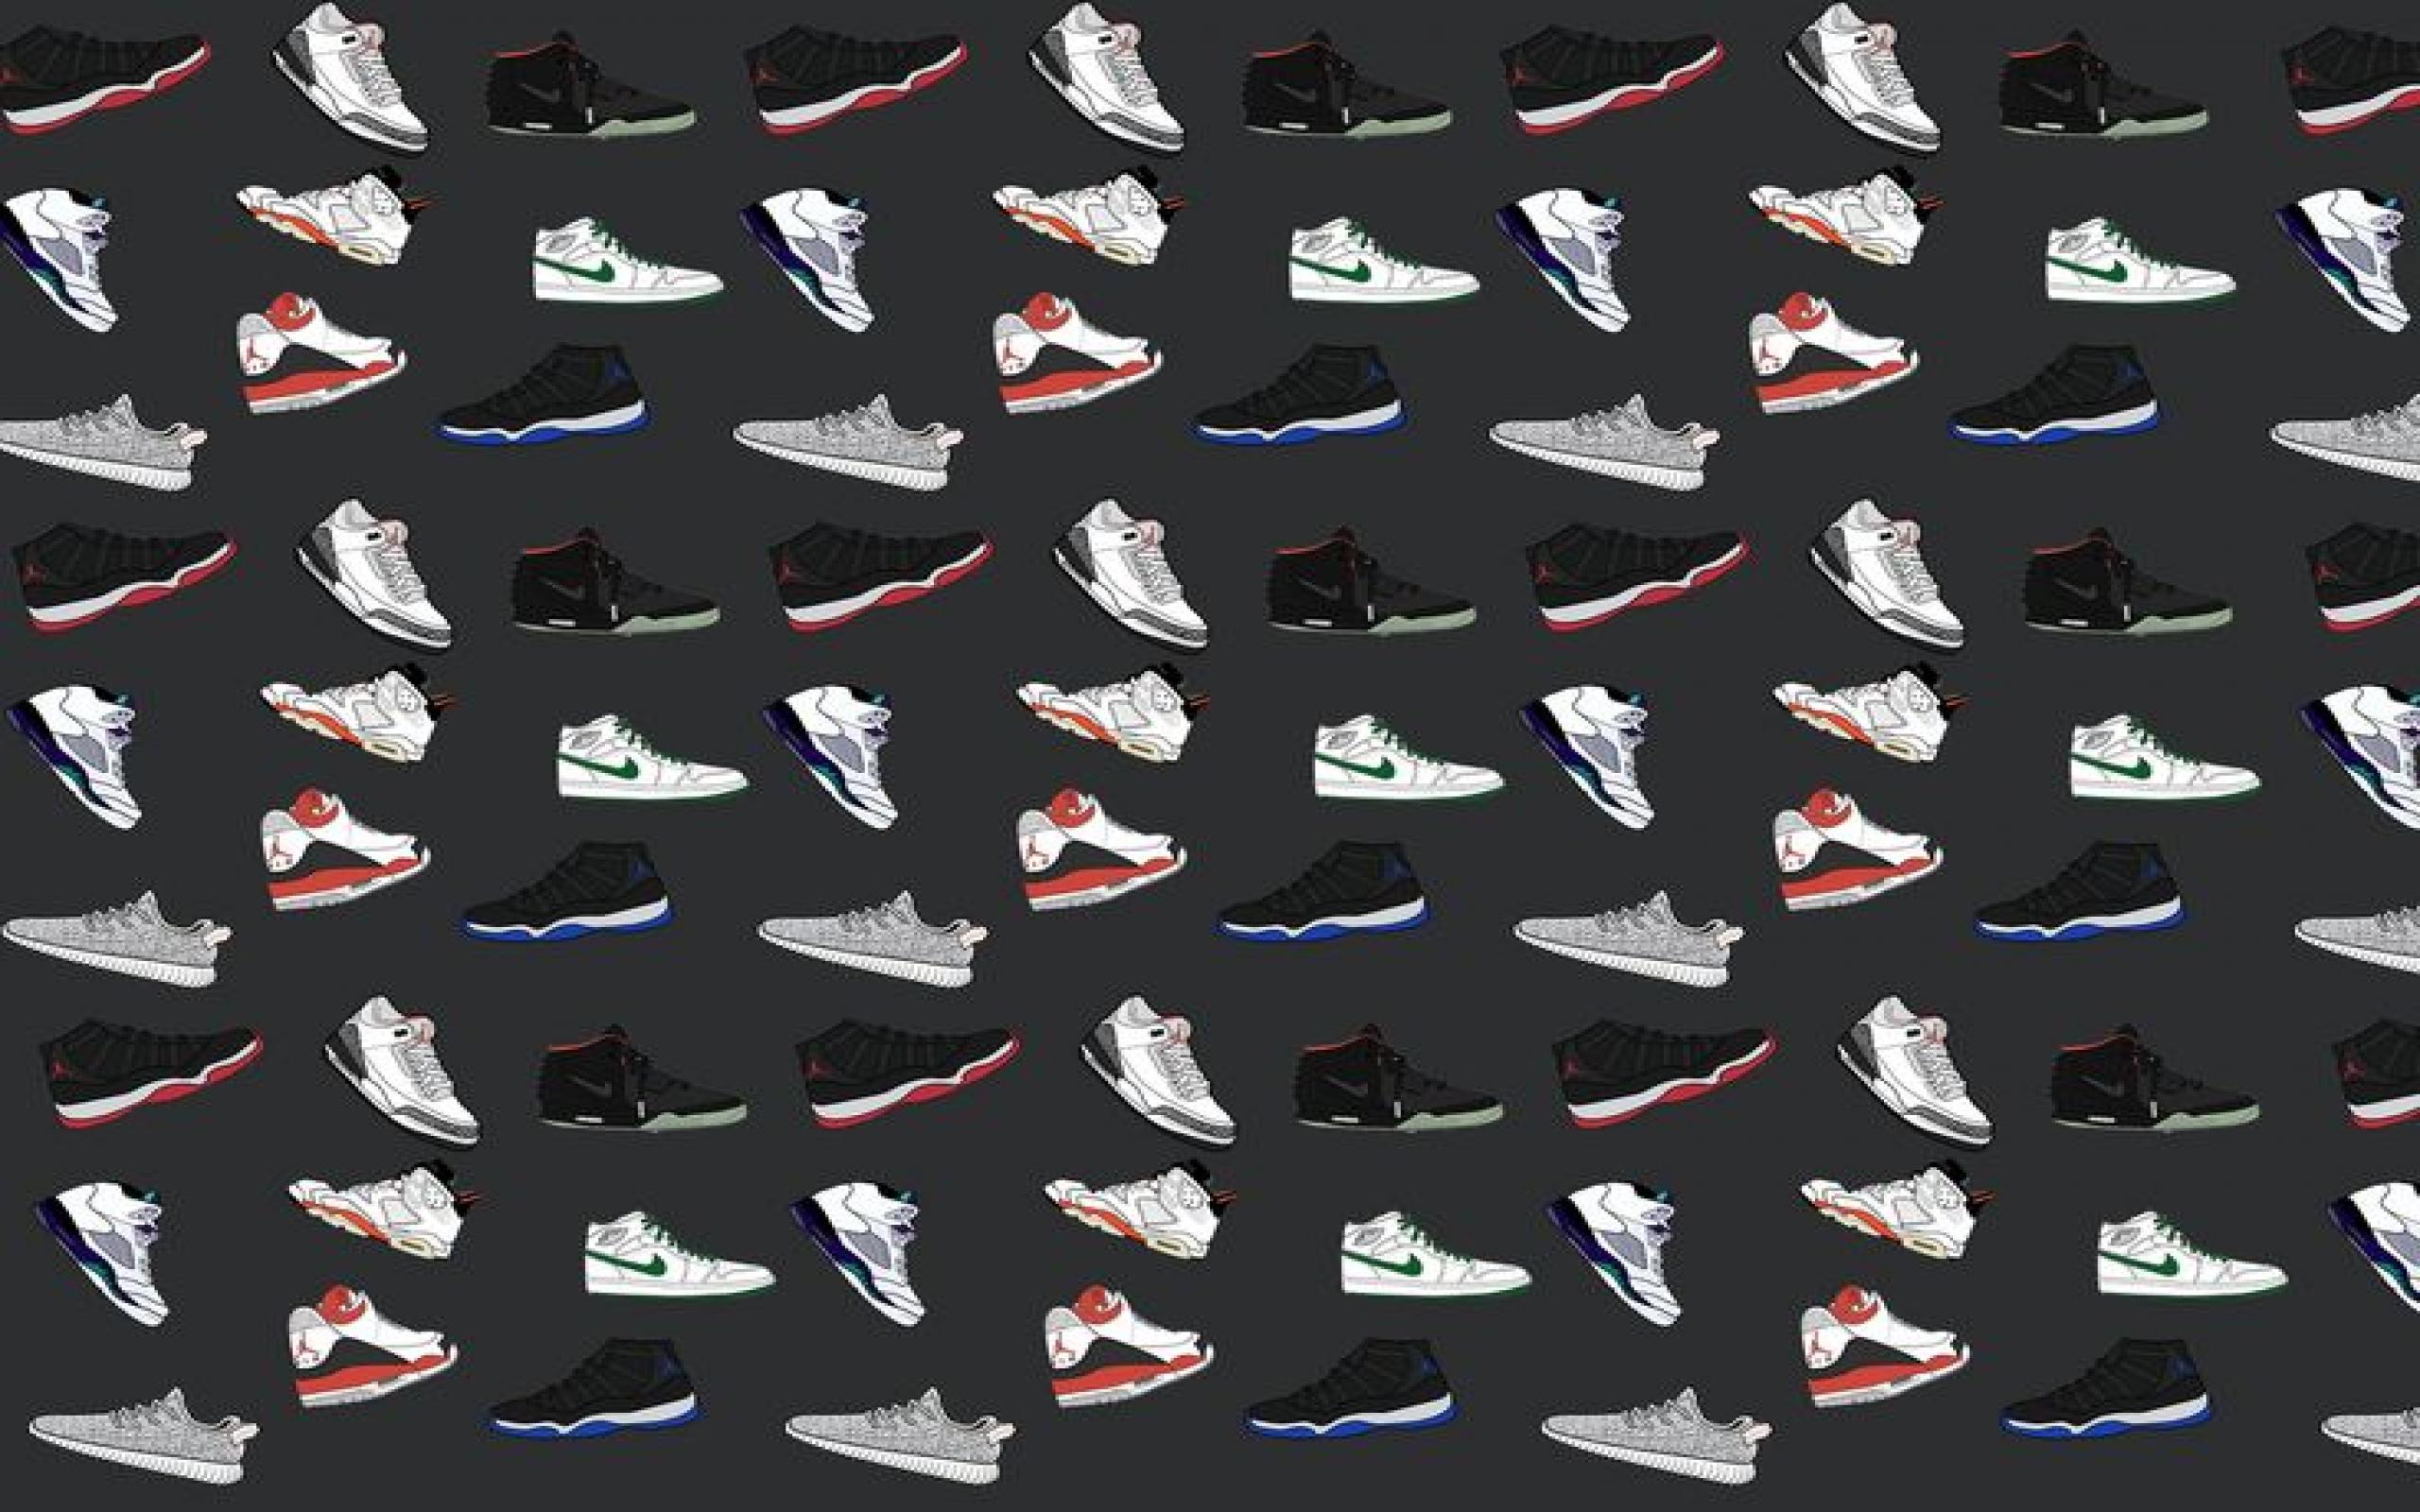 Sneaker Head Wallpapers